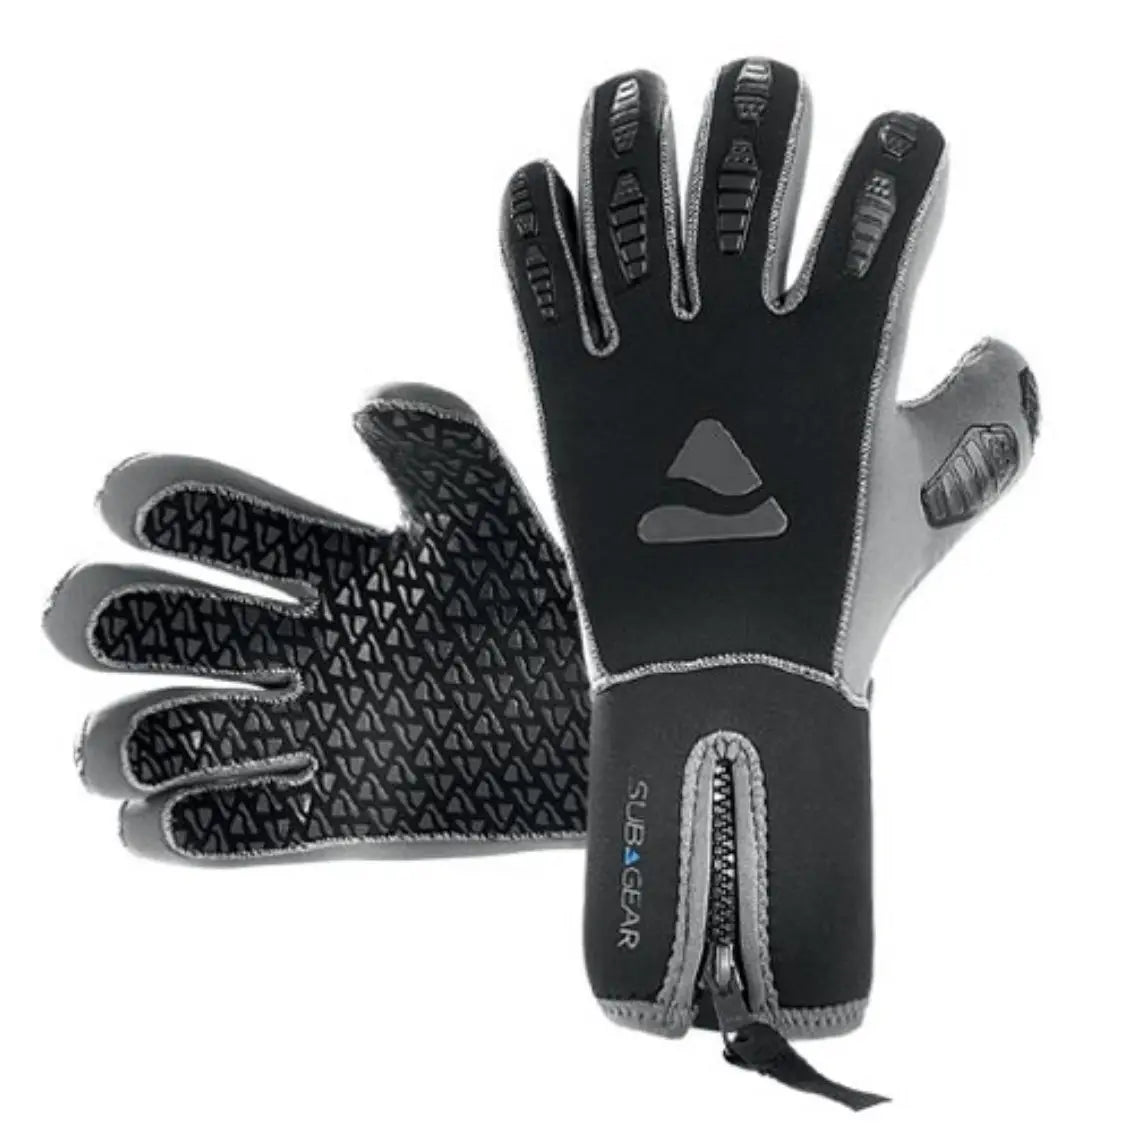 Sub Gear Dive Gloves 5mm